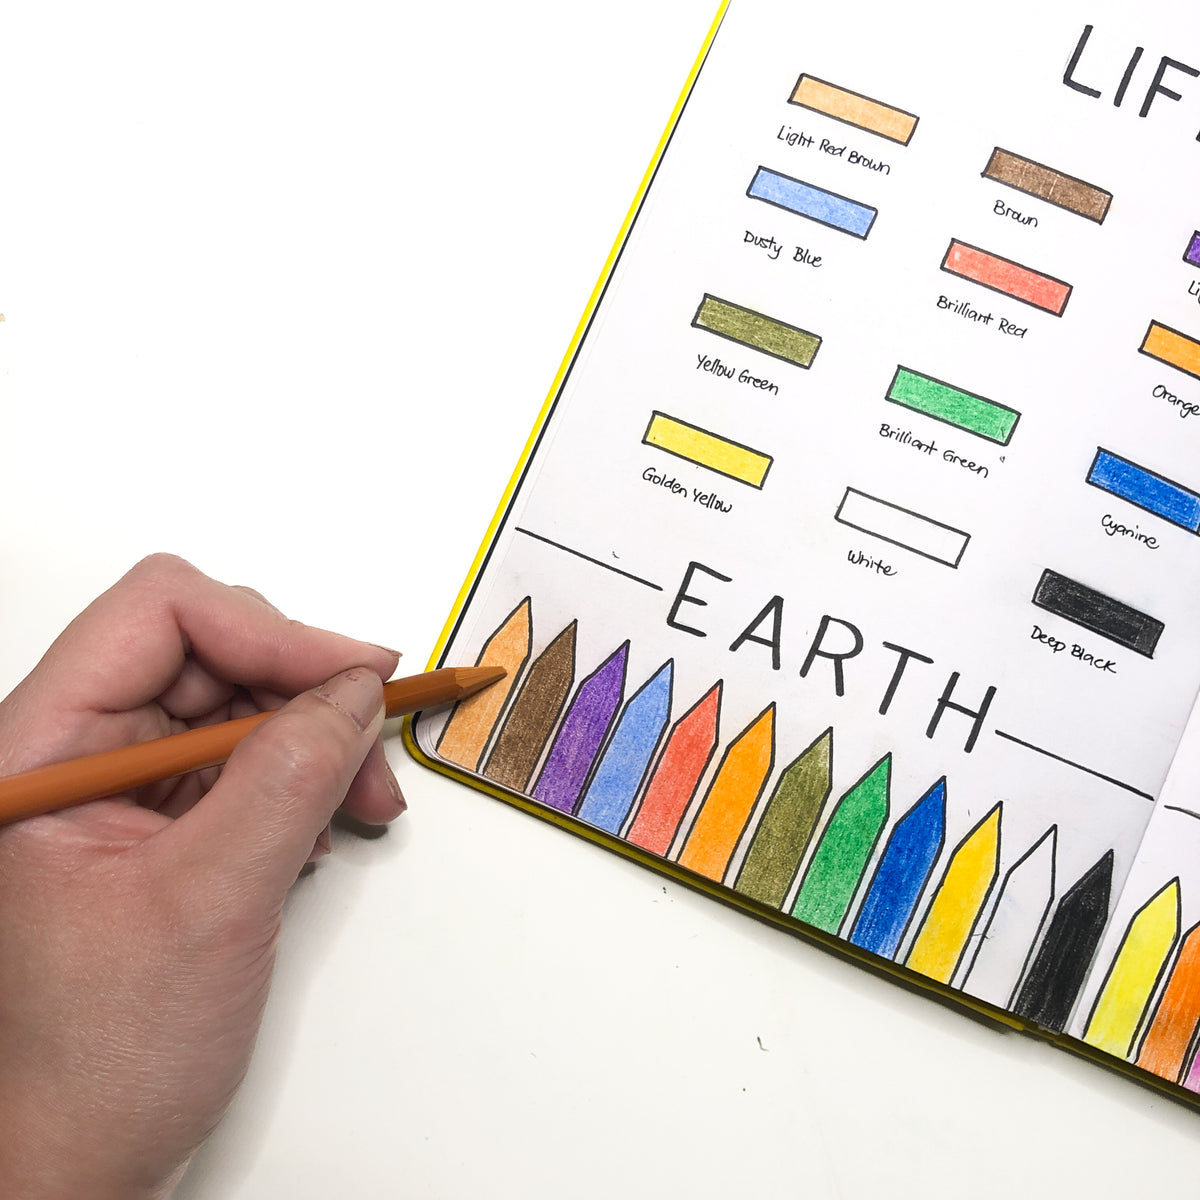 Woodless Pastel Pencils - Earth Colours - Set of 12